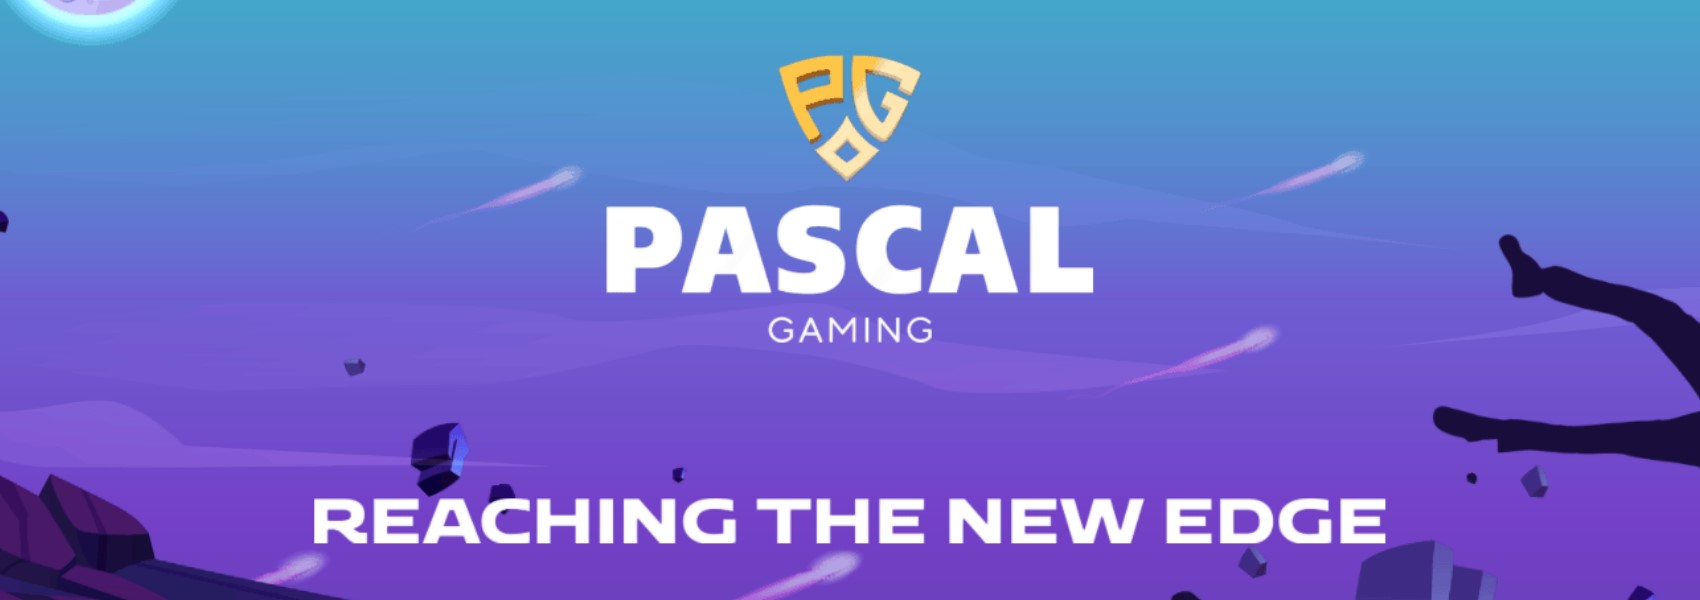 Pascal Gaming游戏提供商